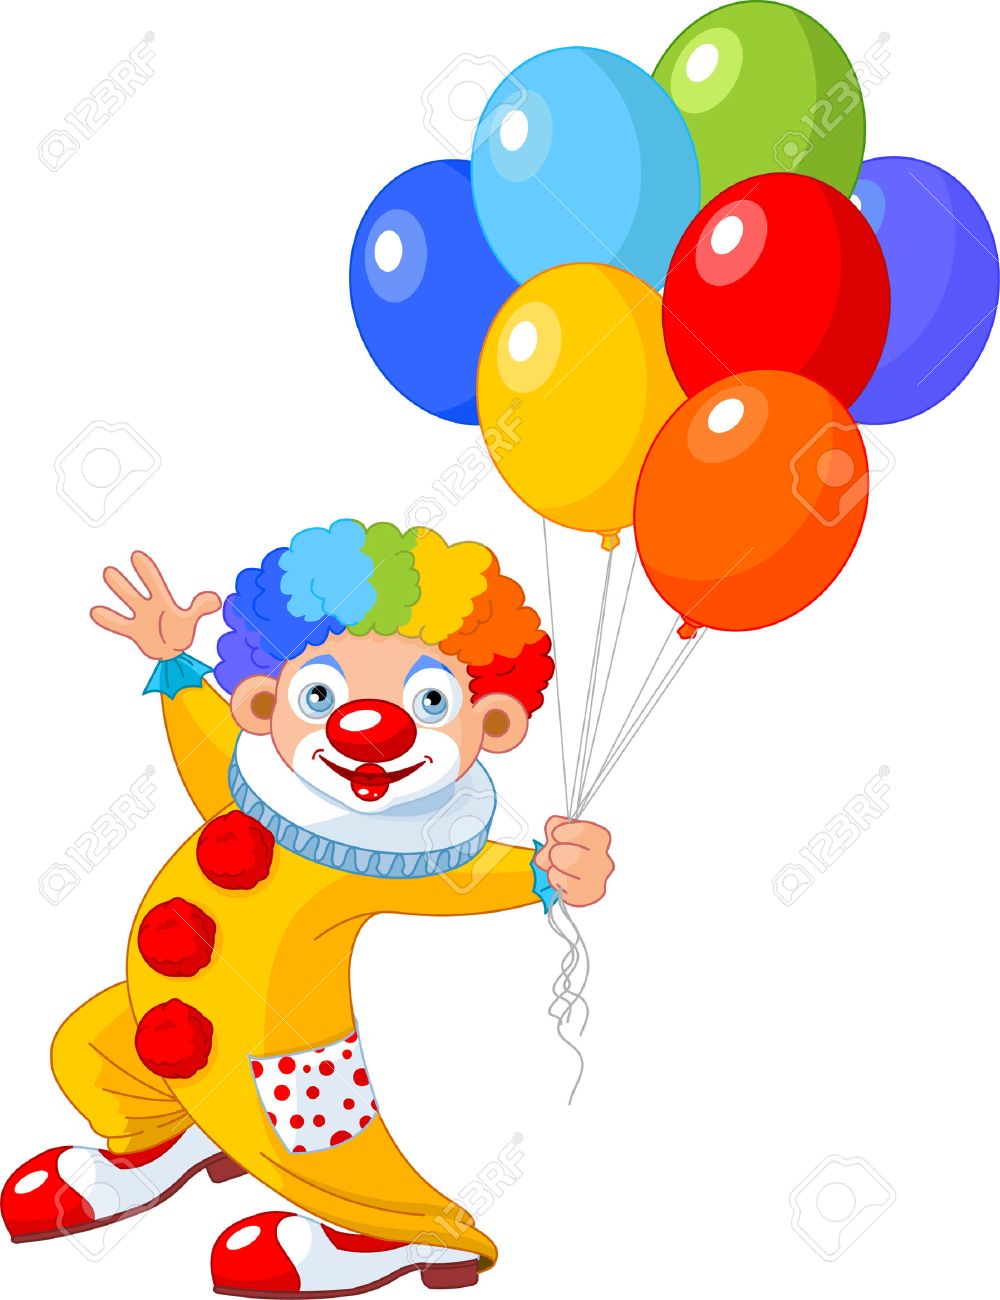 Clown Holding Balloons Clipart.